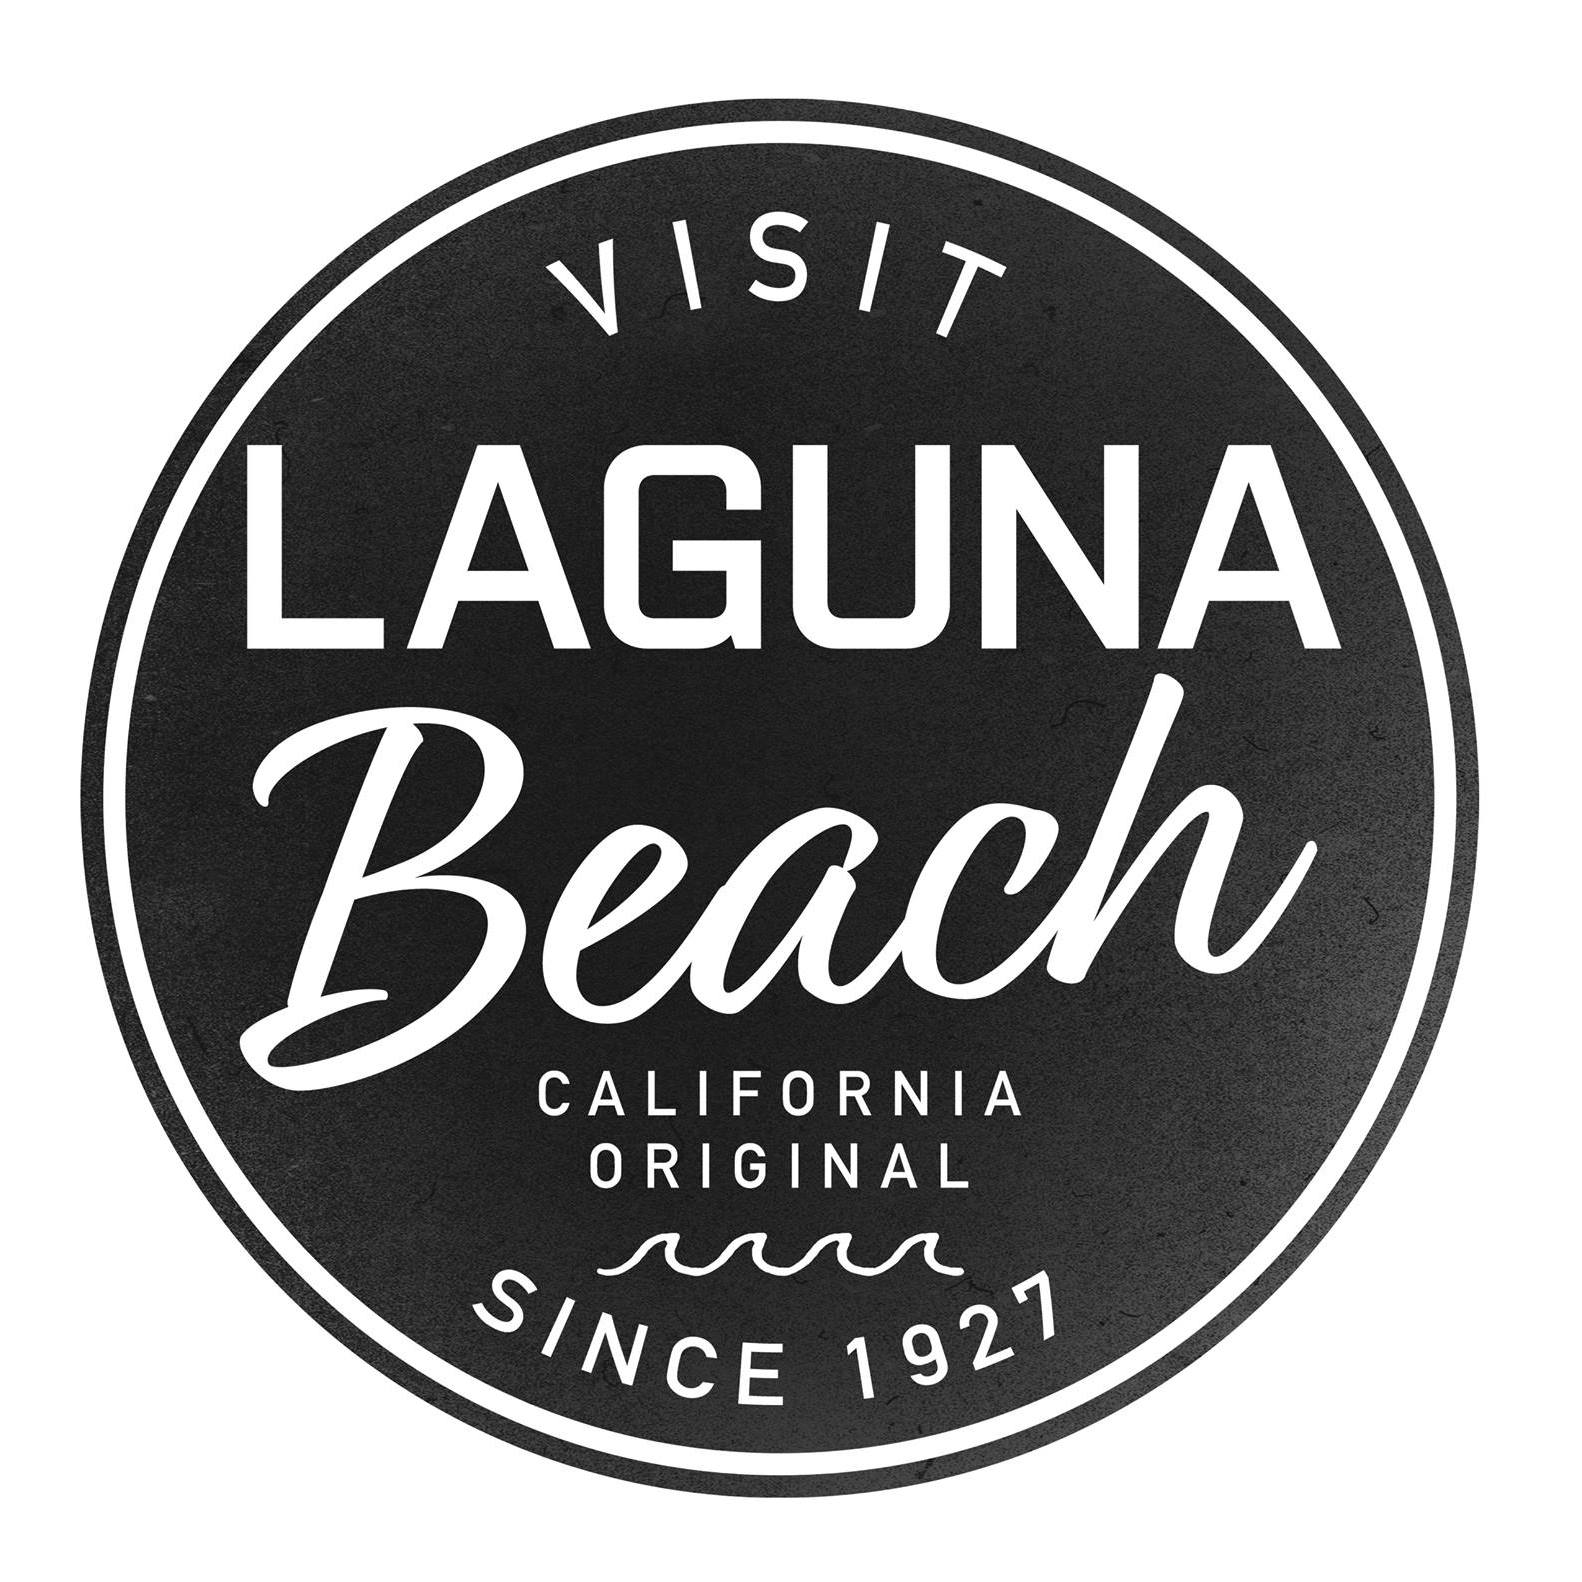 Image result for Laguna Beach Visitor & Conference Bureau